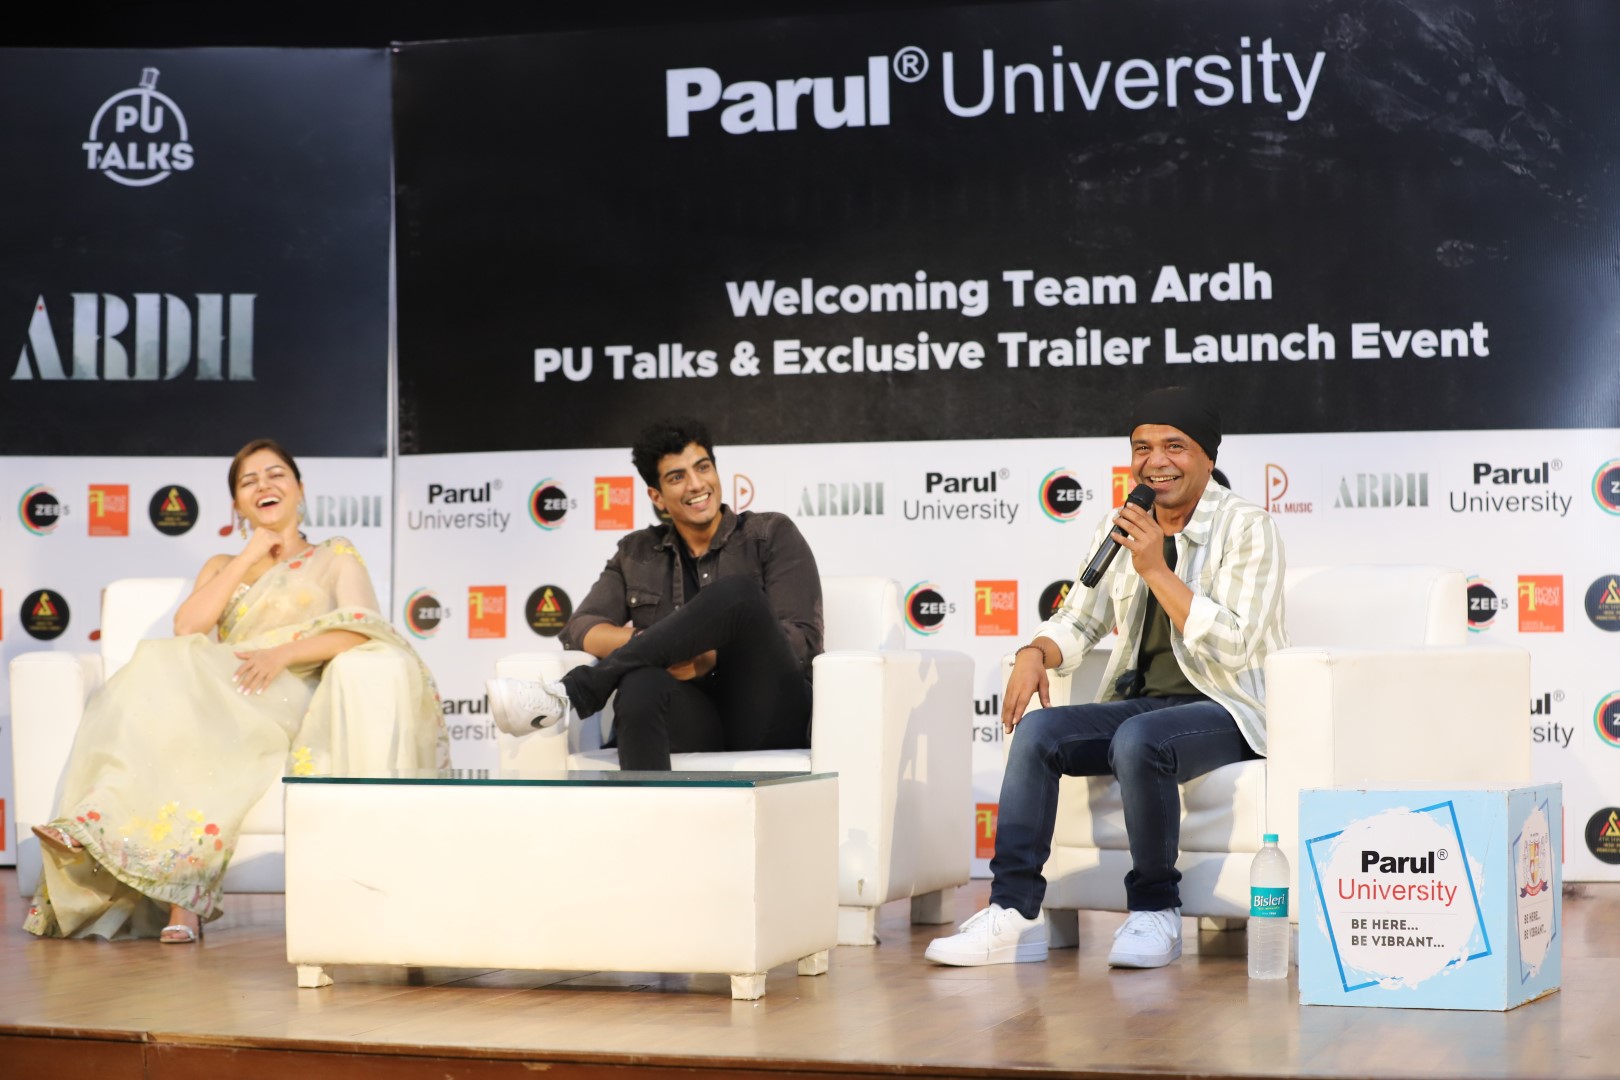 Rajpal Yadav, Rubina Dilaik and Palaash Muchhal were spotted interacting with young students at PU